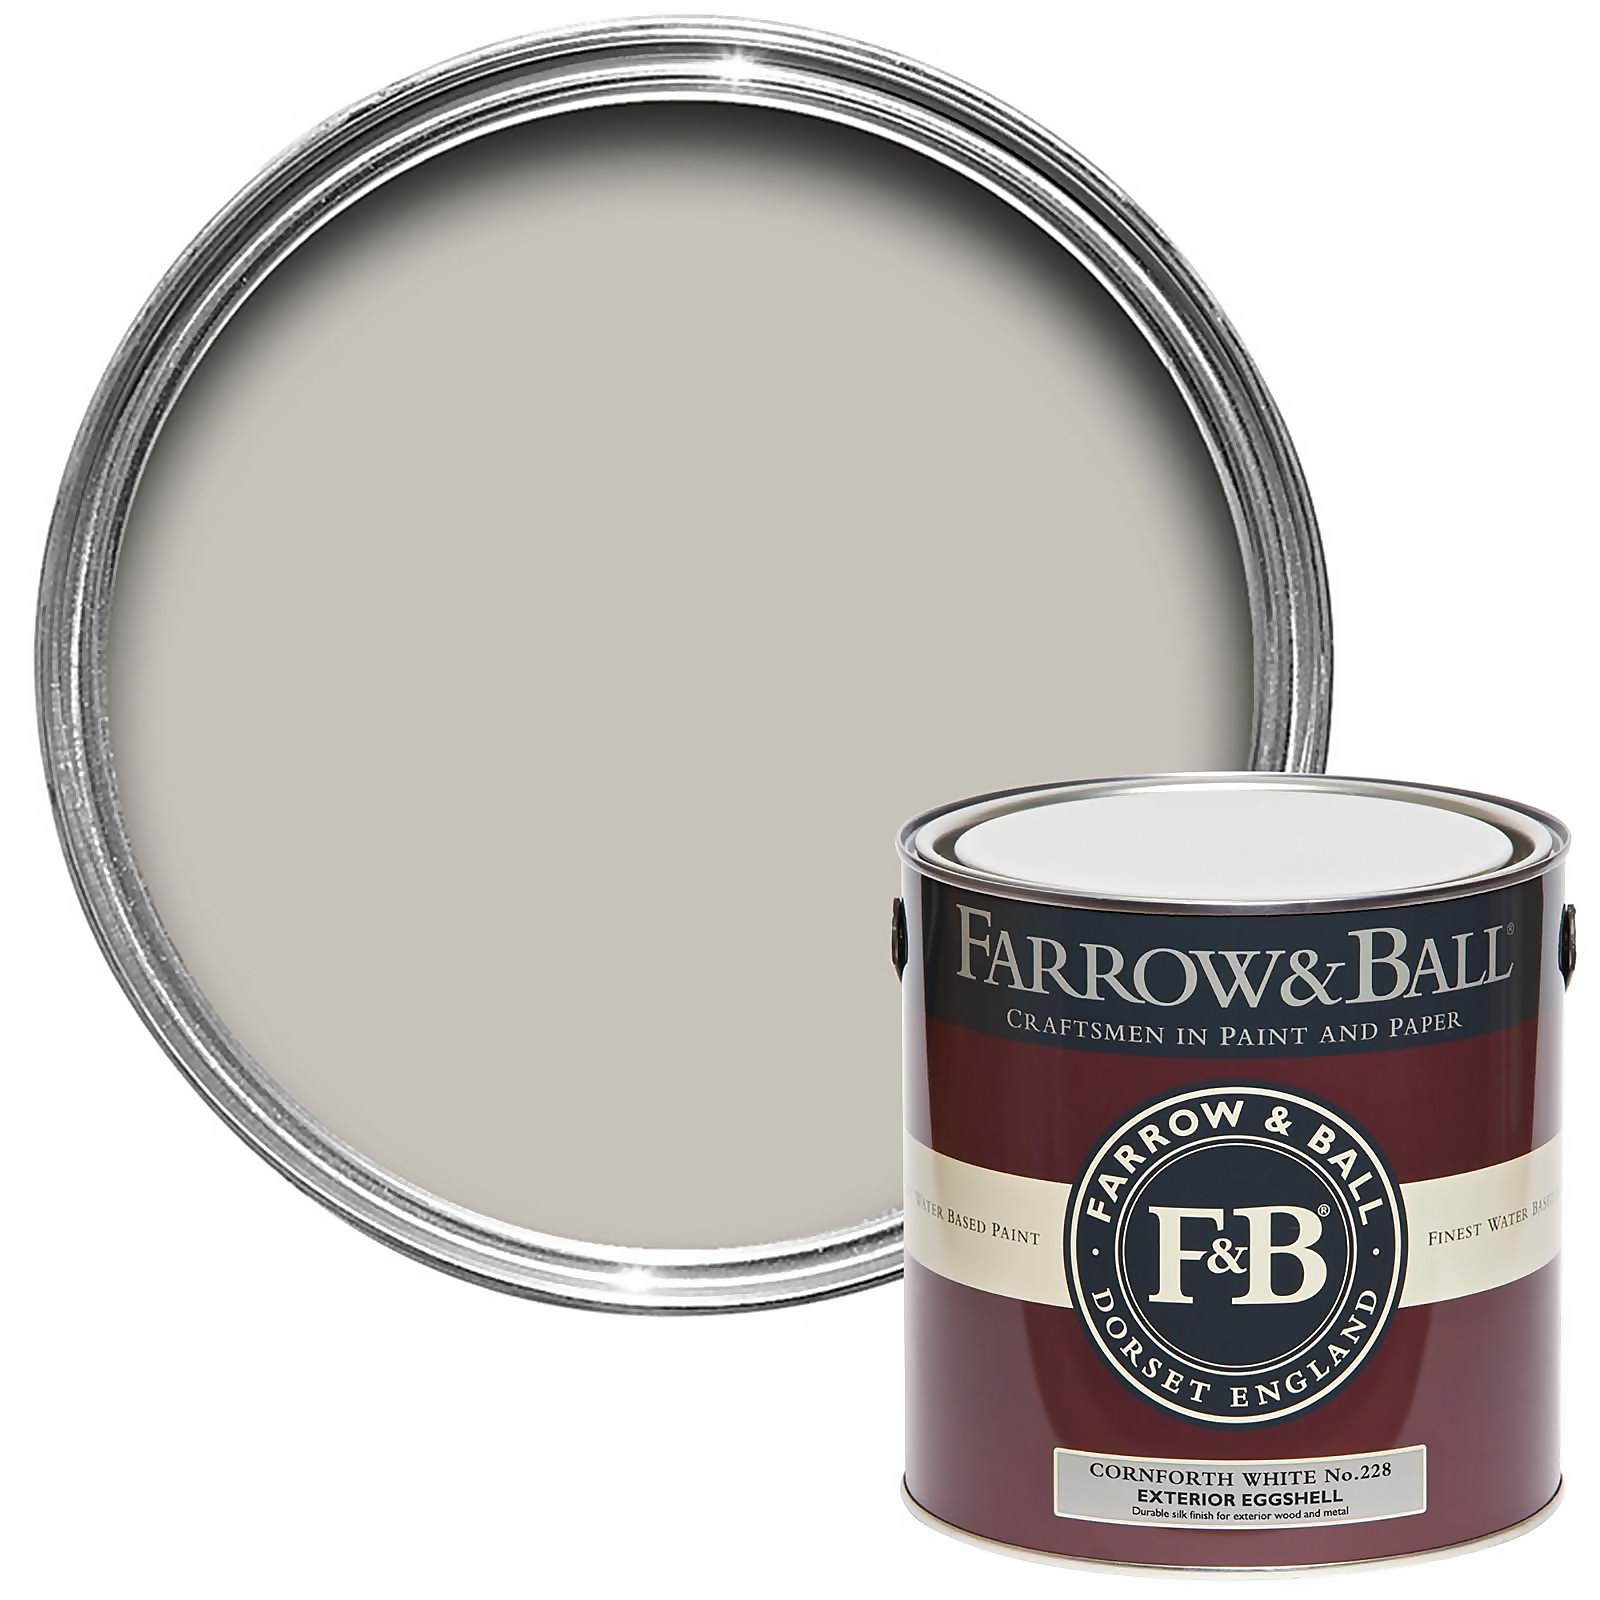 Photo of Farrow & Ball Exterior Eggshell Paint Cornforth White - 2.5l